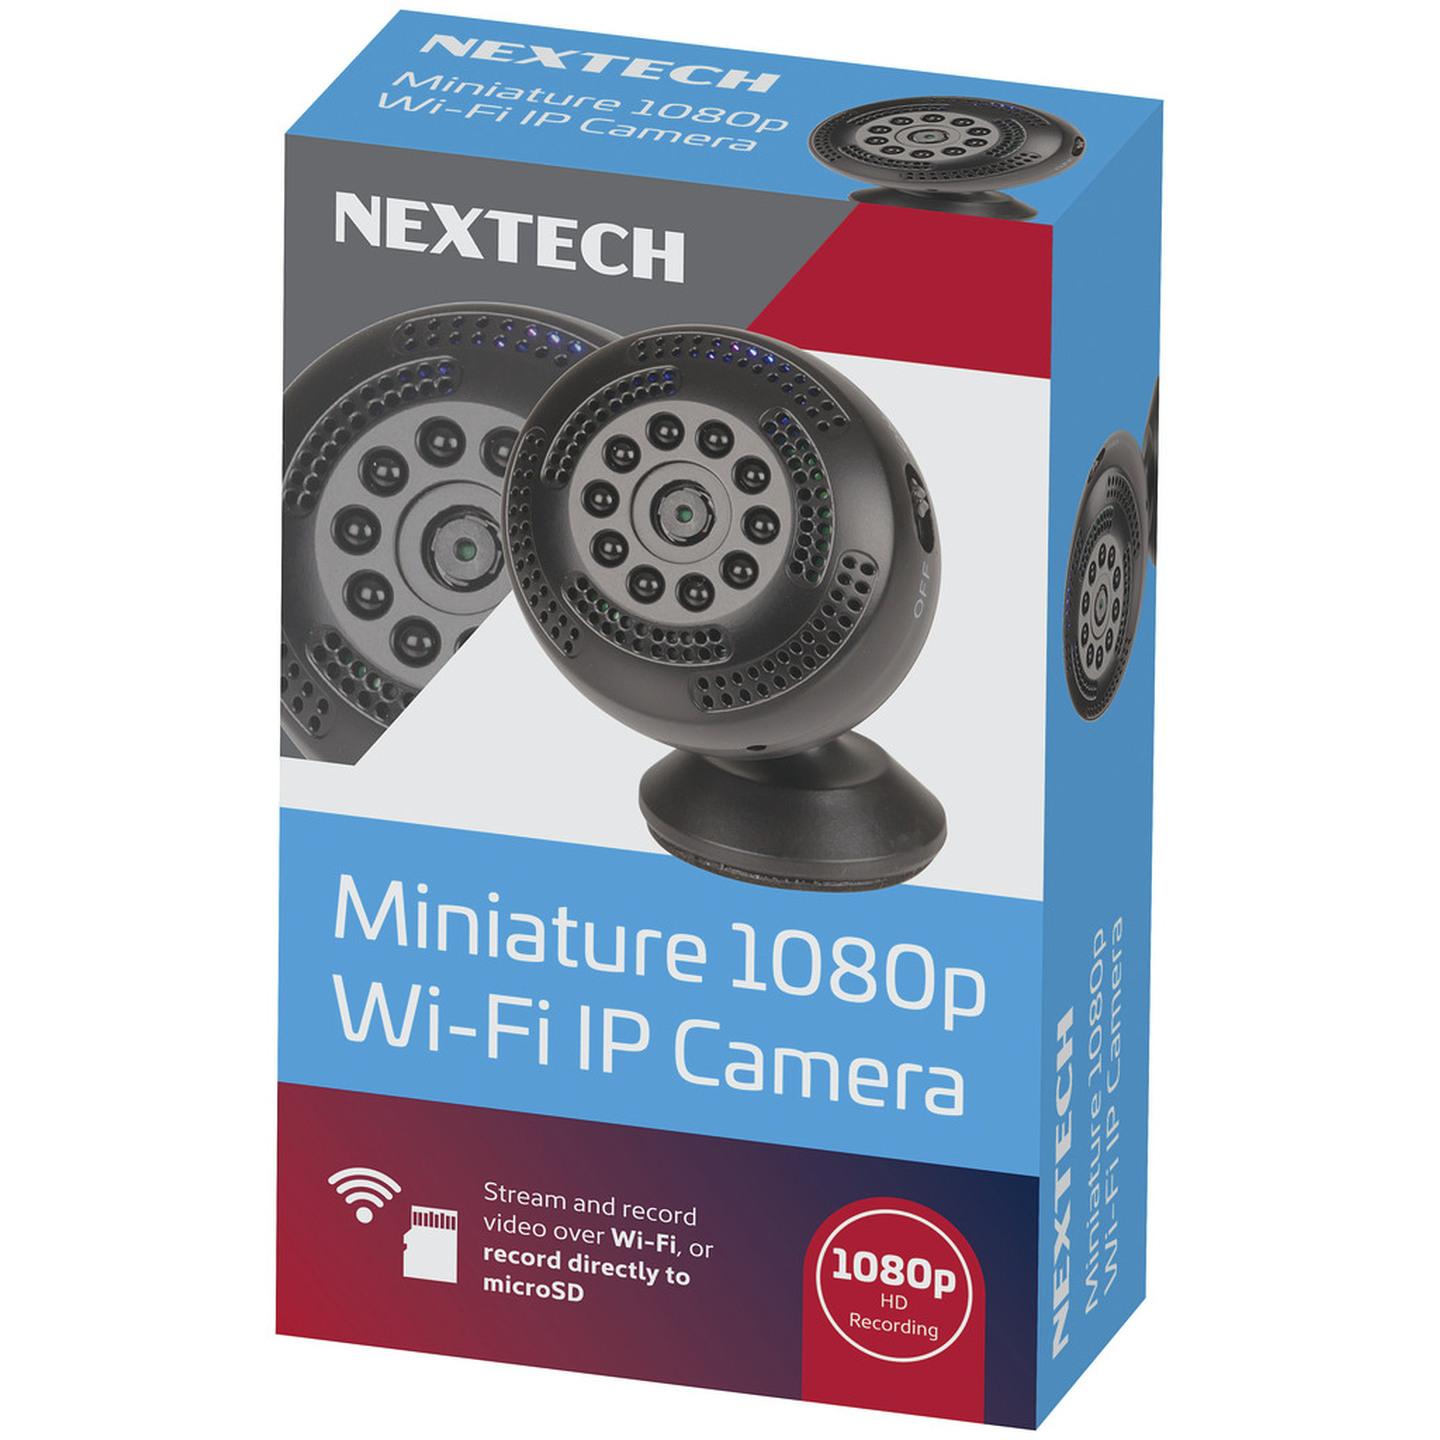 Miniature 1080p WiFi IP Camera